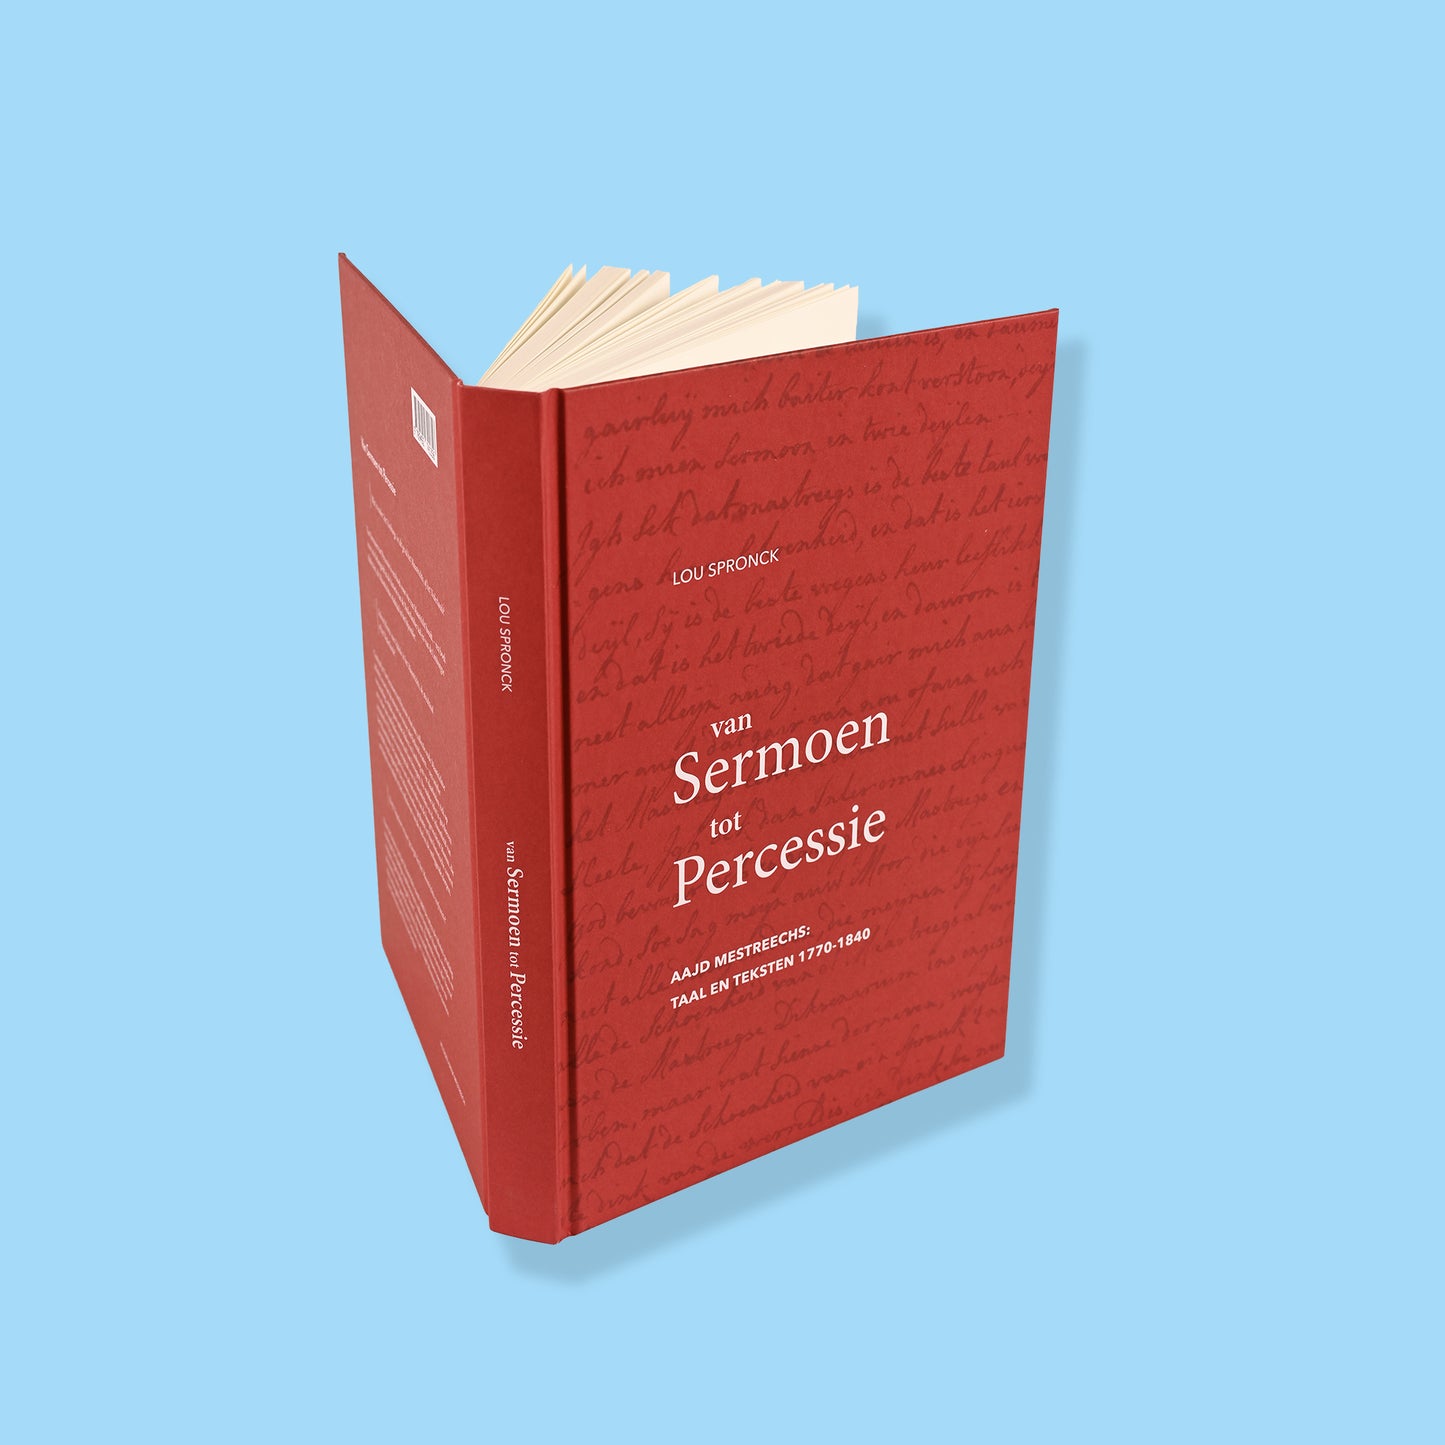 Van Sermoen tot Percessie. Aajd Mestreechs: taal en teksten 1770-1840